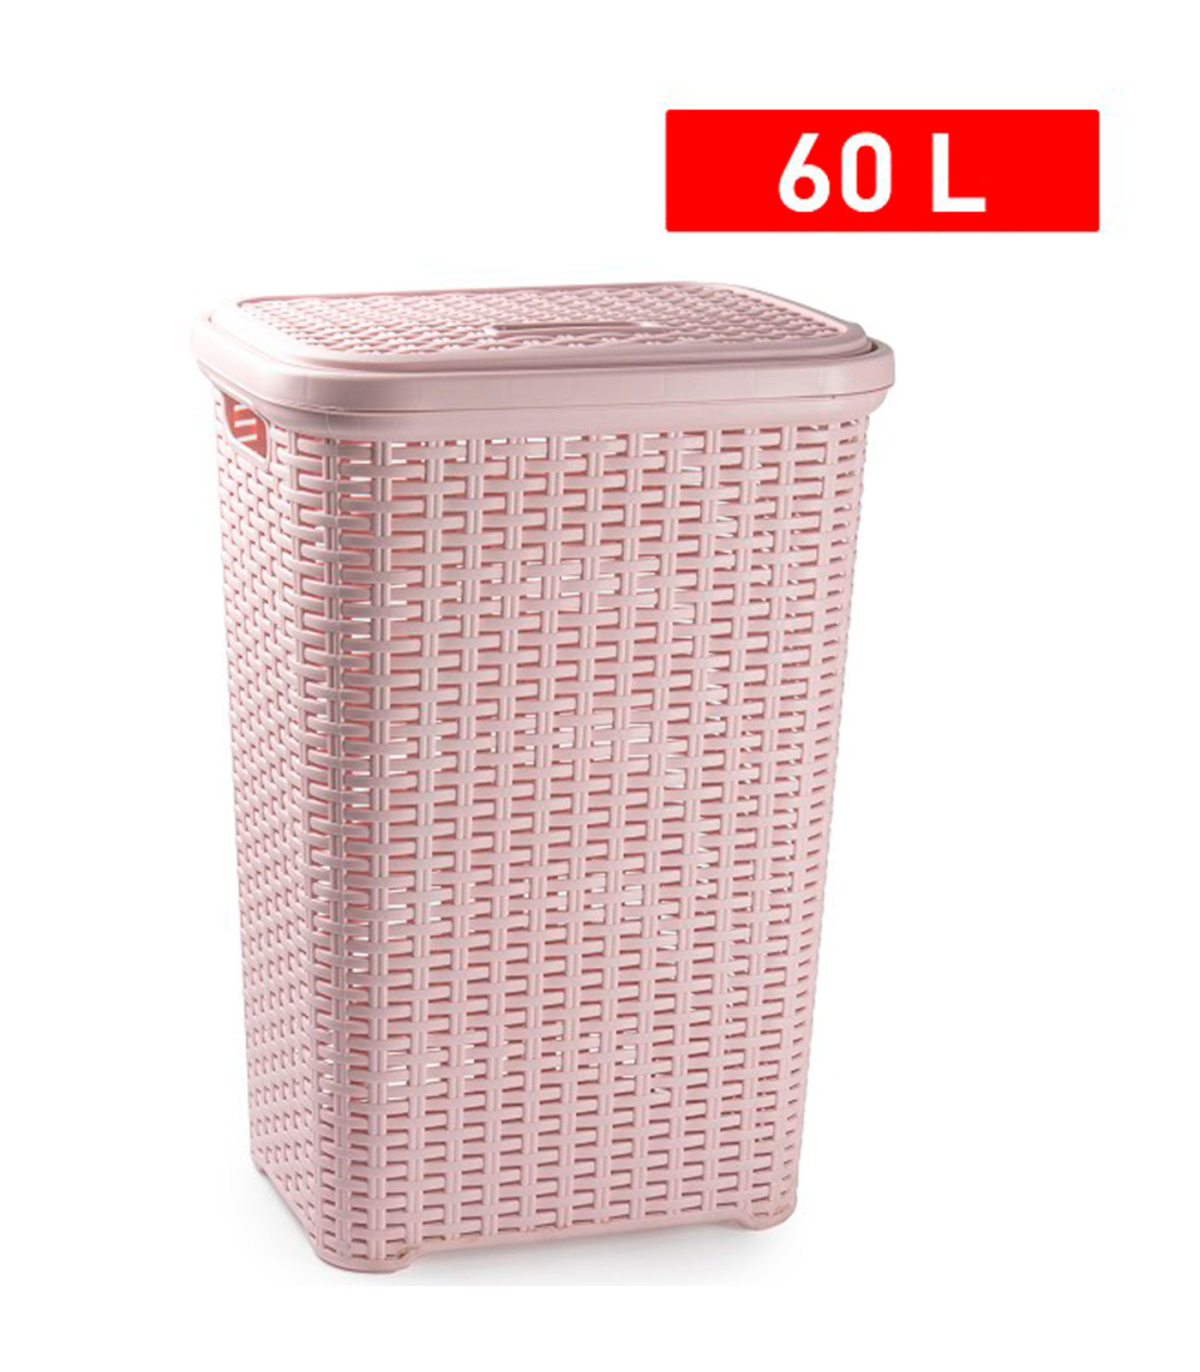 Tradineur - Cesto para ropa sucia de plástico con tapa 60 litros, wengué,  43 x 35,5 x 62 cm, pongotodo, cubo para la colada co - AliExpress